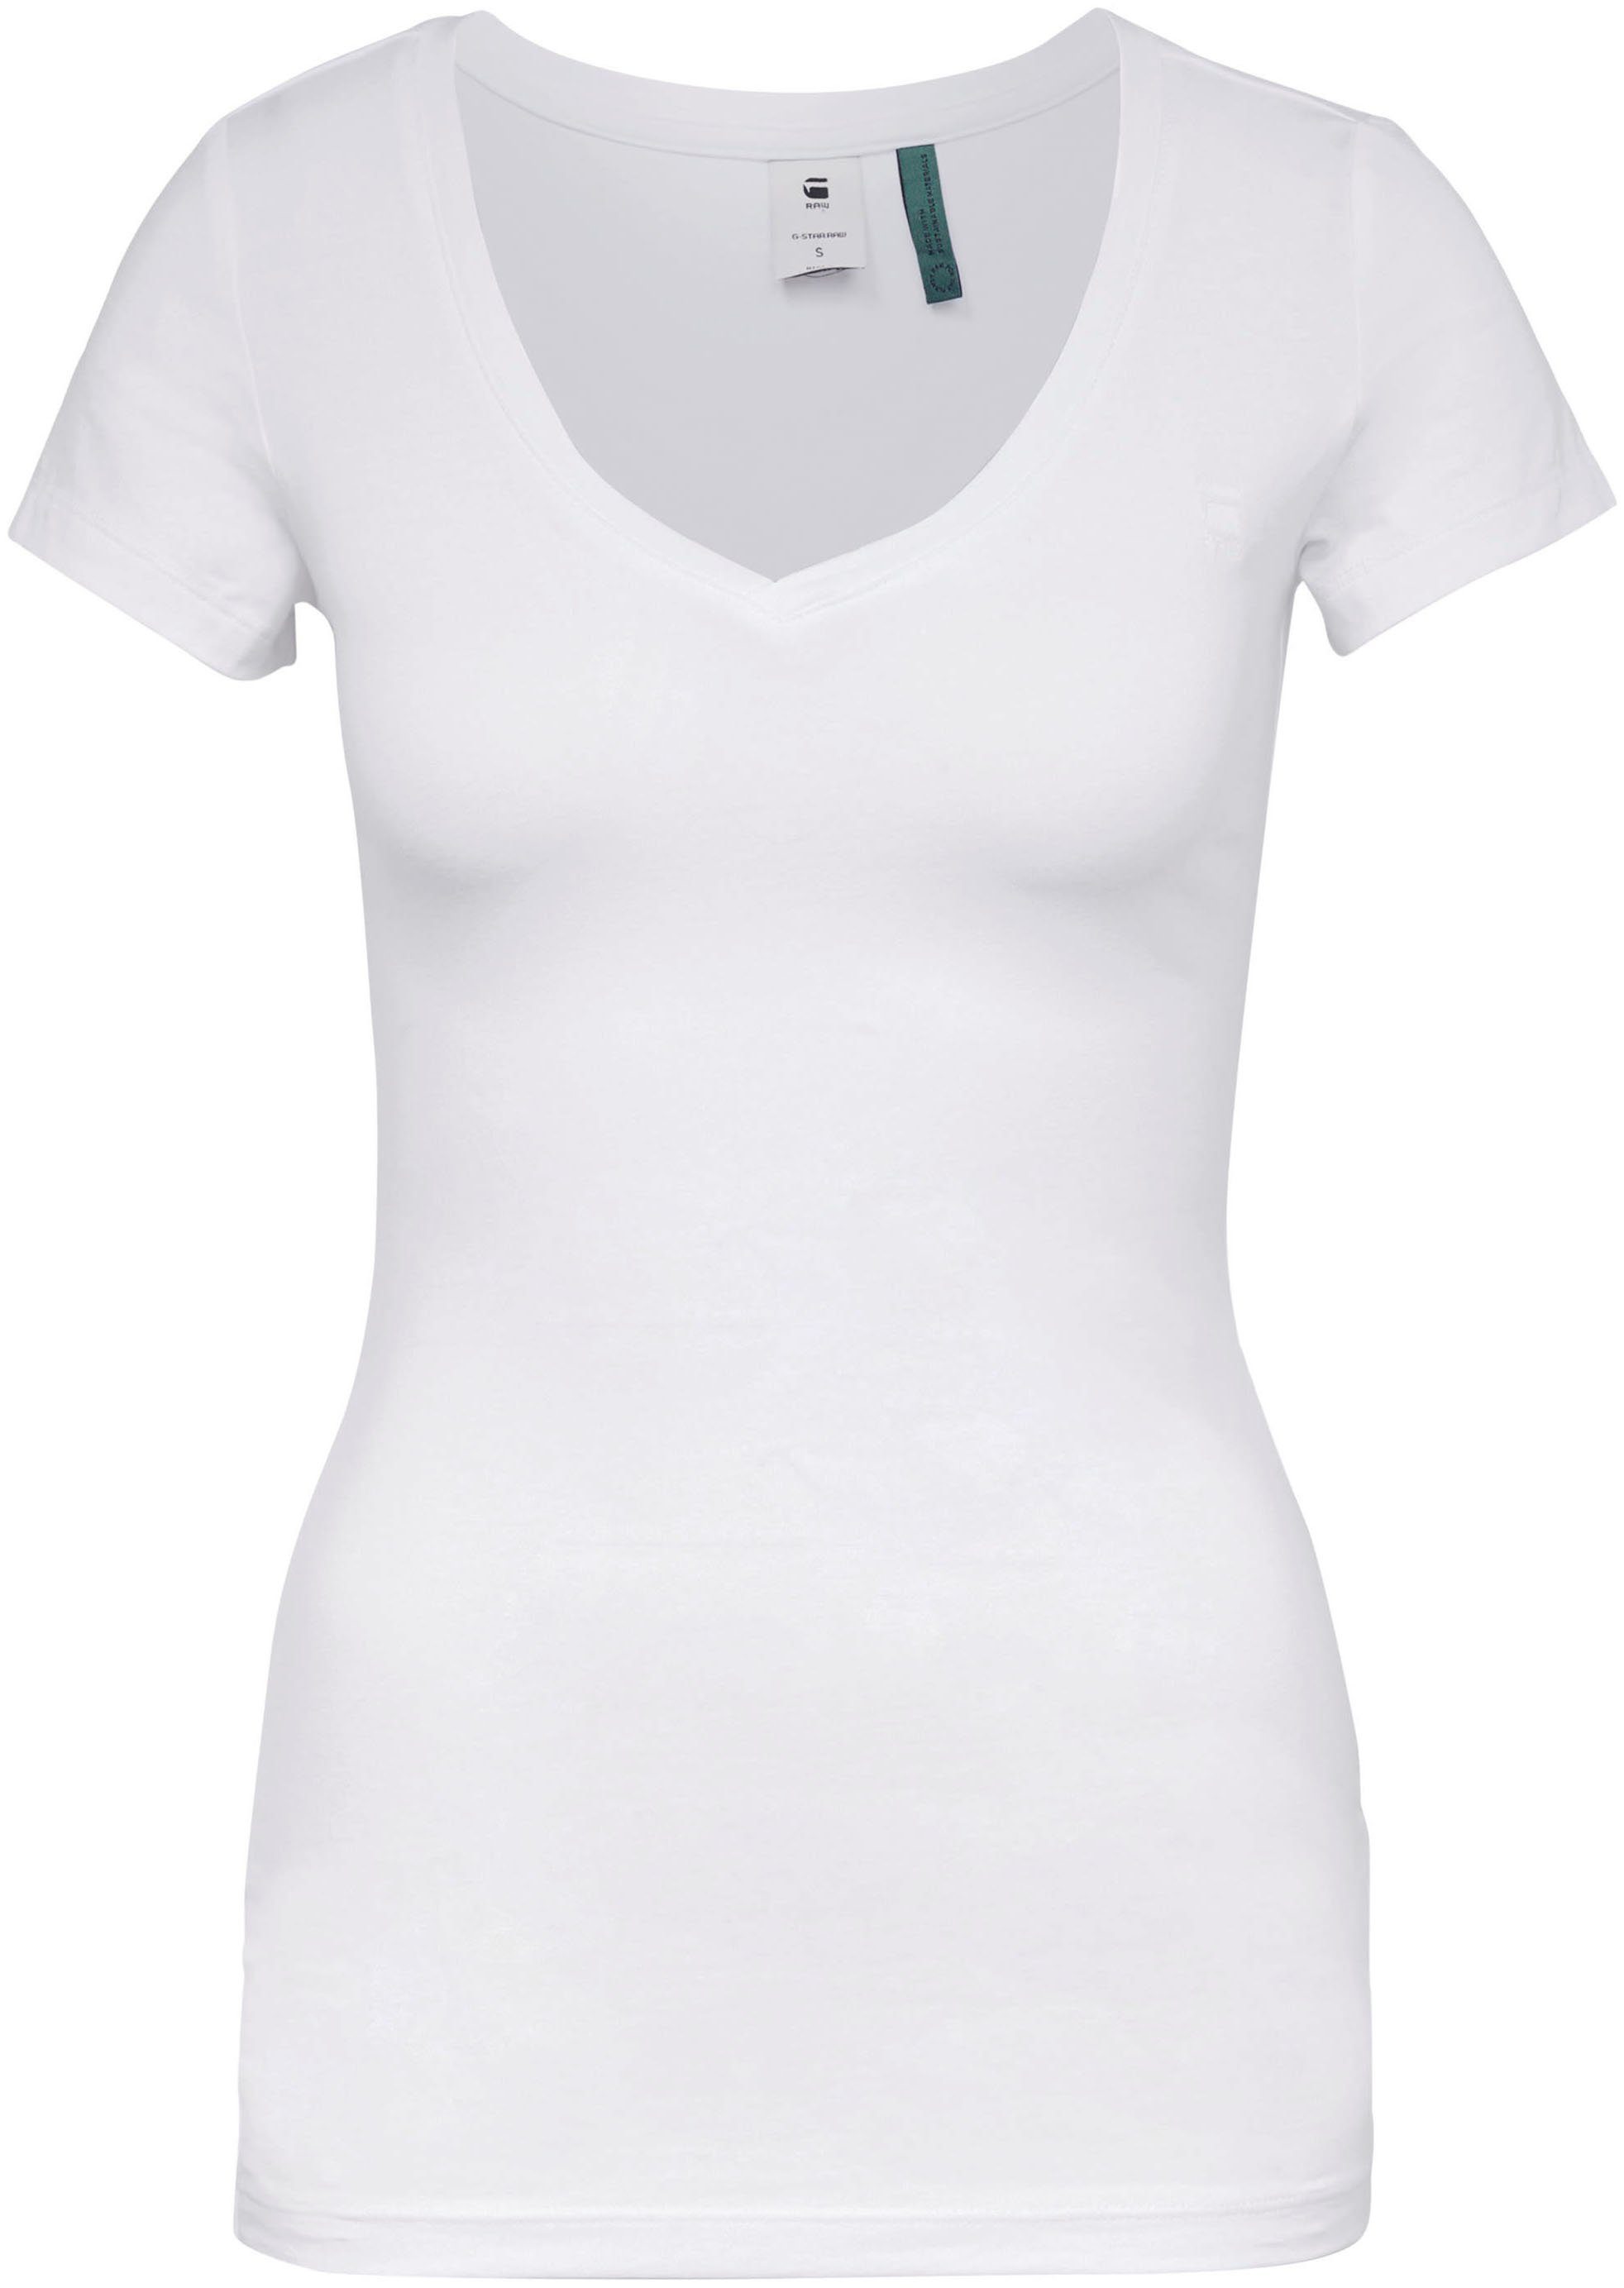 G-Star RAW cap v t white V-Shirt sl kleinem Logodruck vorne wmn mit Base